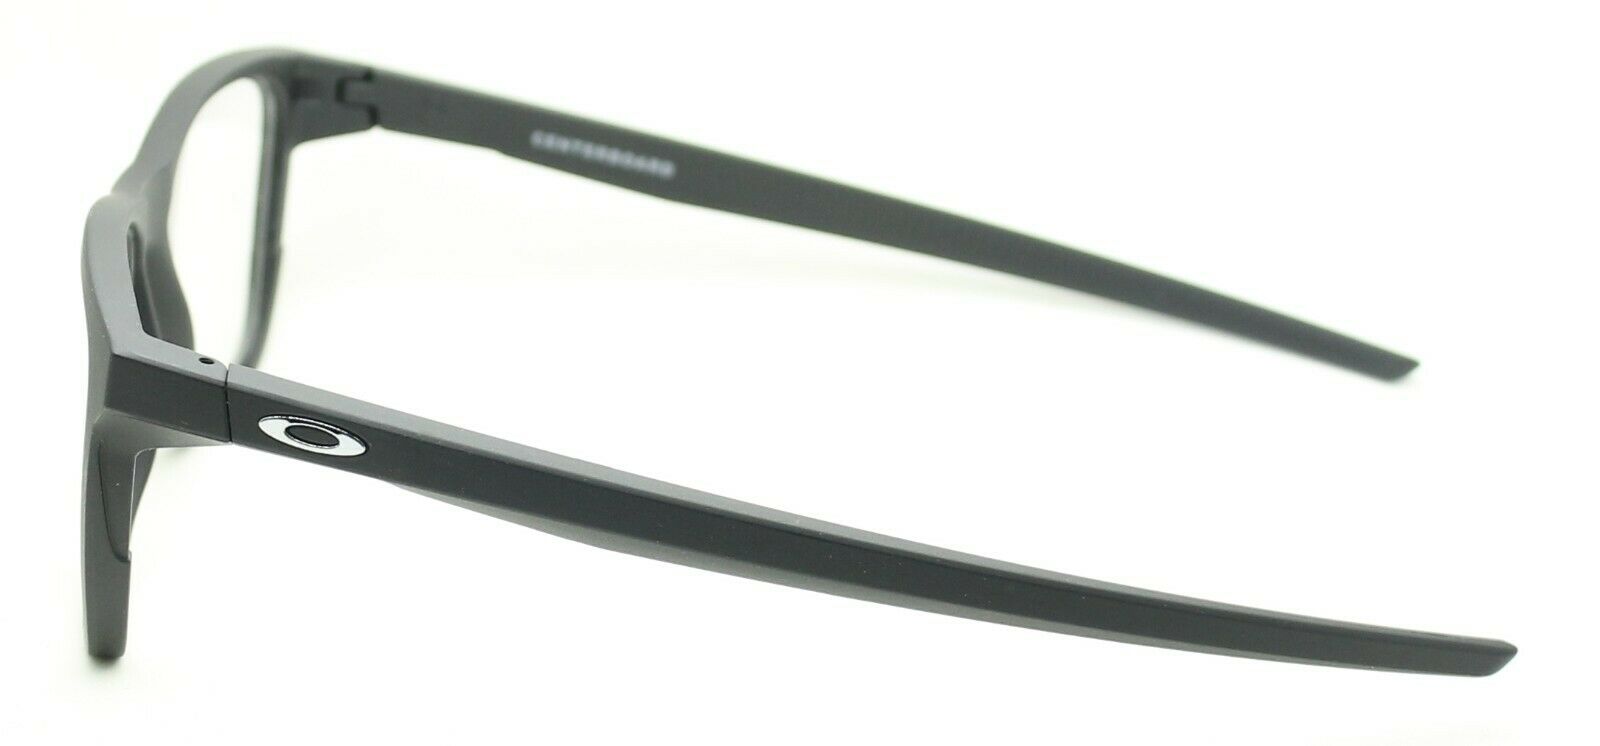 OAKLEY CENTREBOARD OX8163-0153 Eyewear FRAMES Glasses RX Optical Eyeglasses New